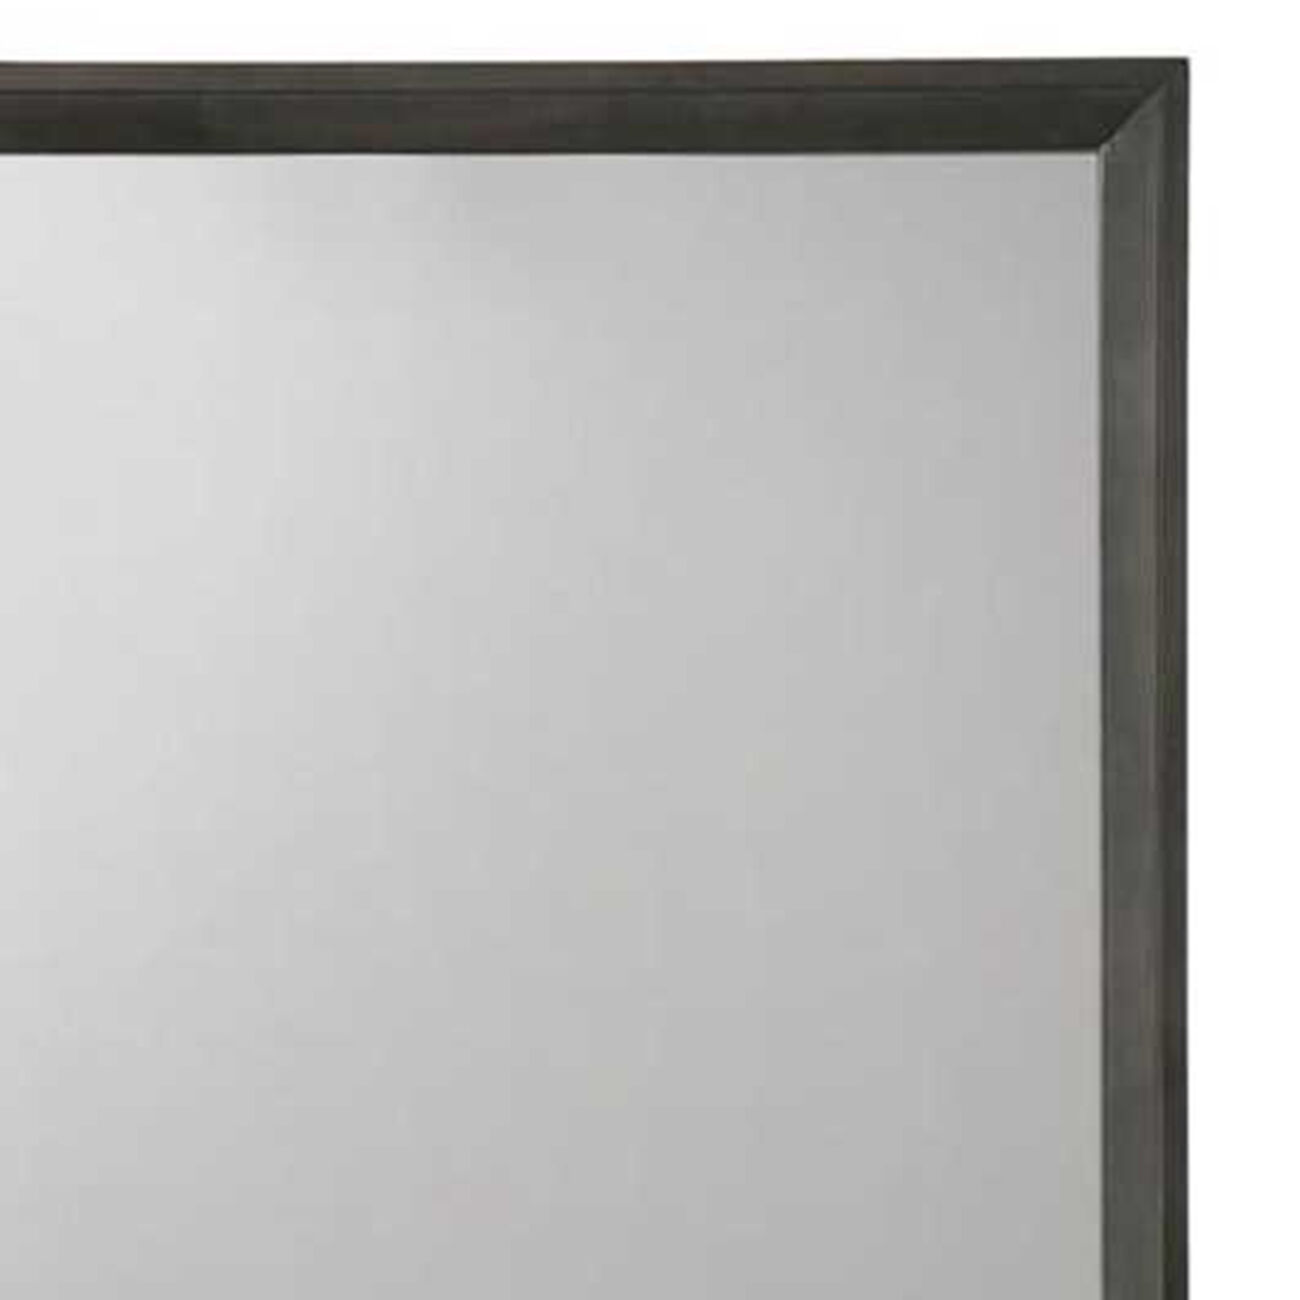 Rectangular Grained Wooden Frame Dresser Top Mirror, Gray and Silver - BM215194